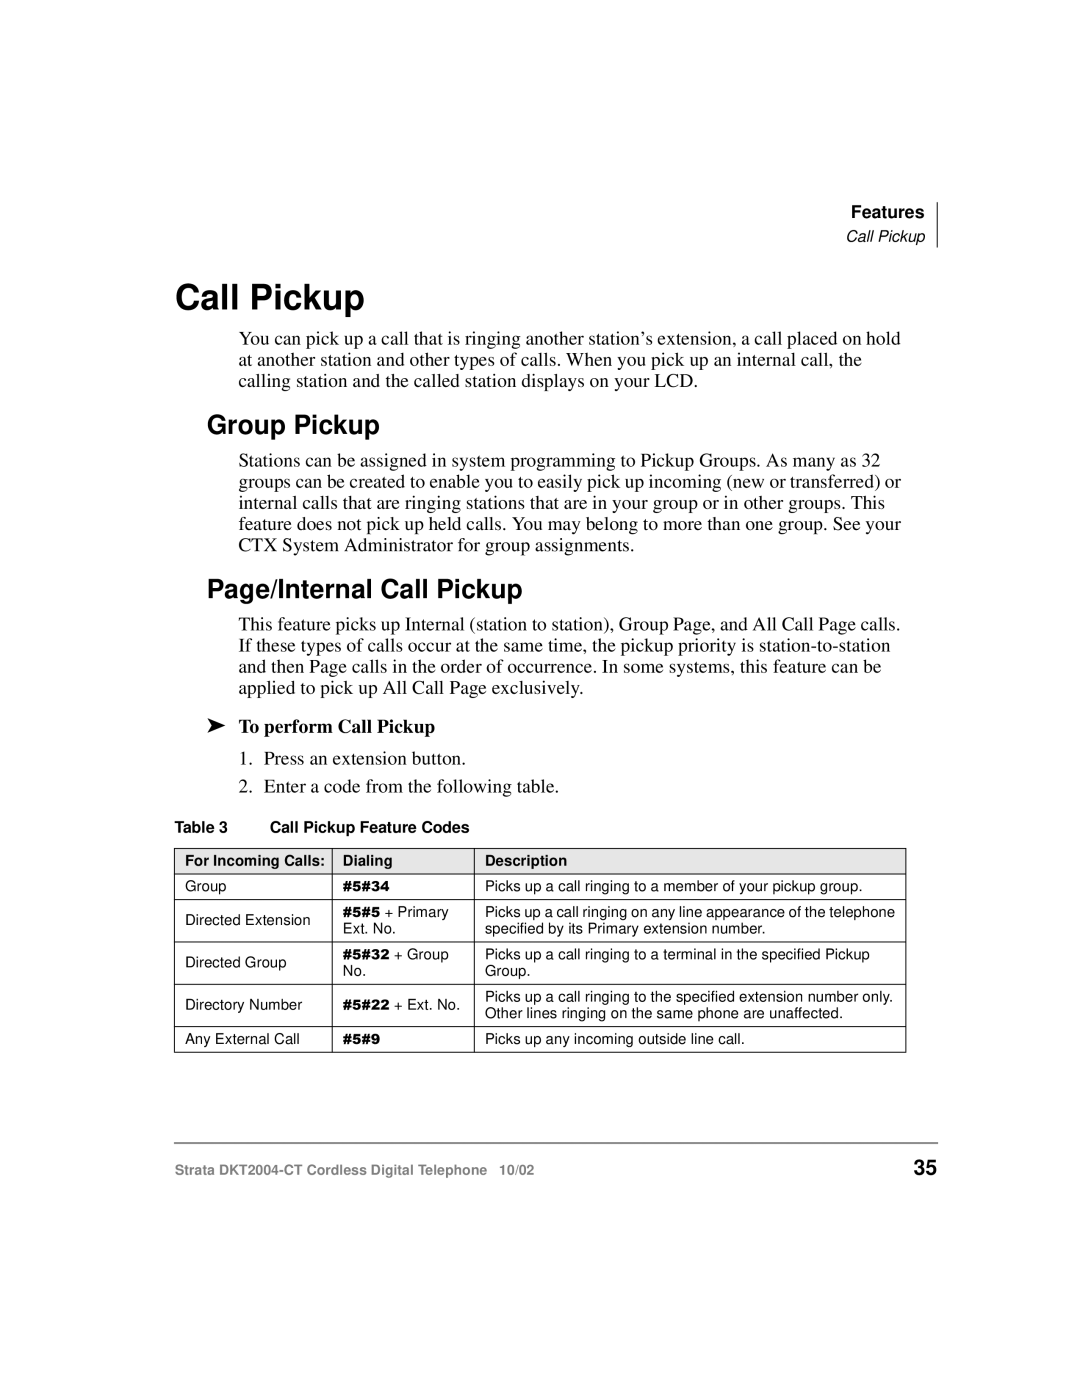 Toshiba DKT2004-CT manual Group Pickup, Page/Internal Call Pickup, To perform Call Pickup 